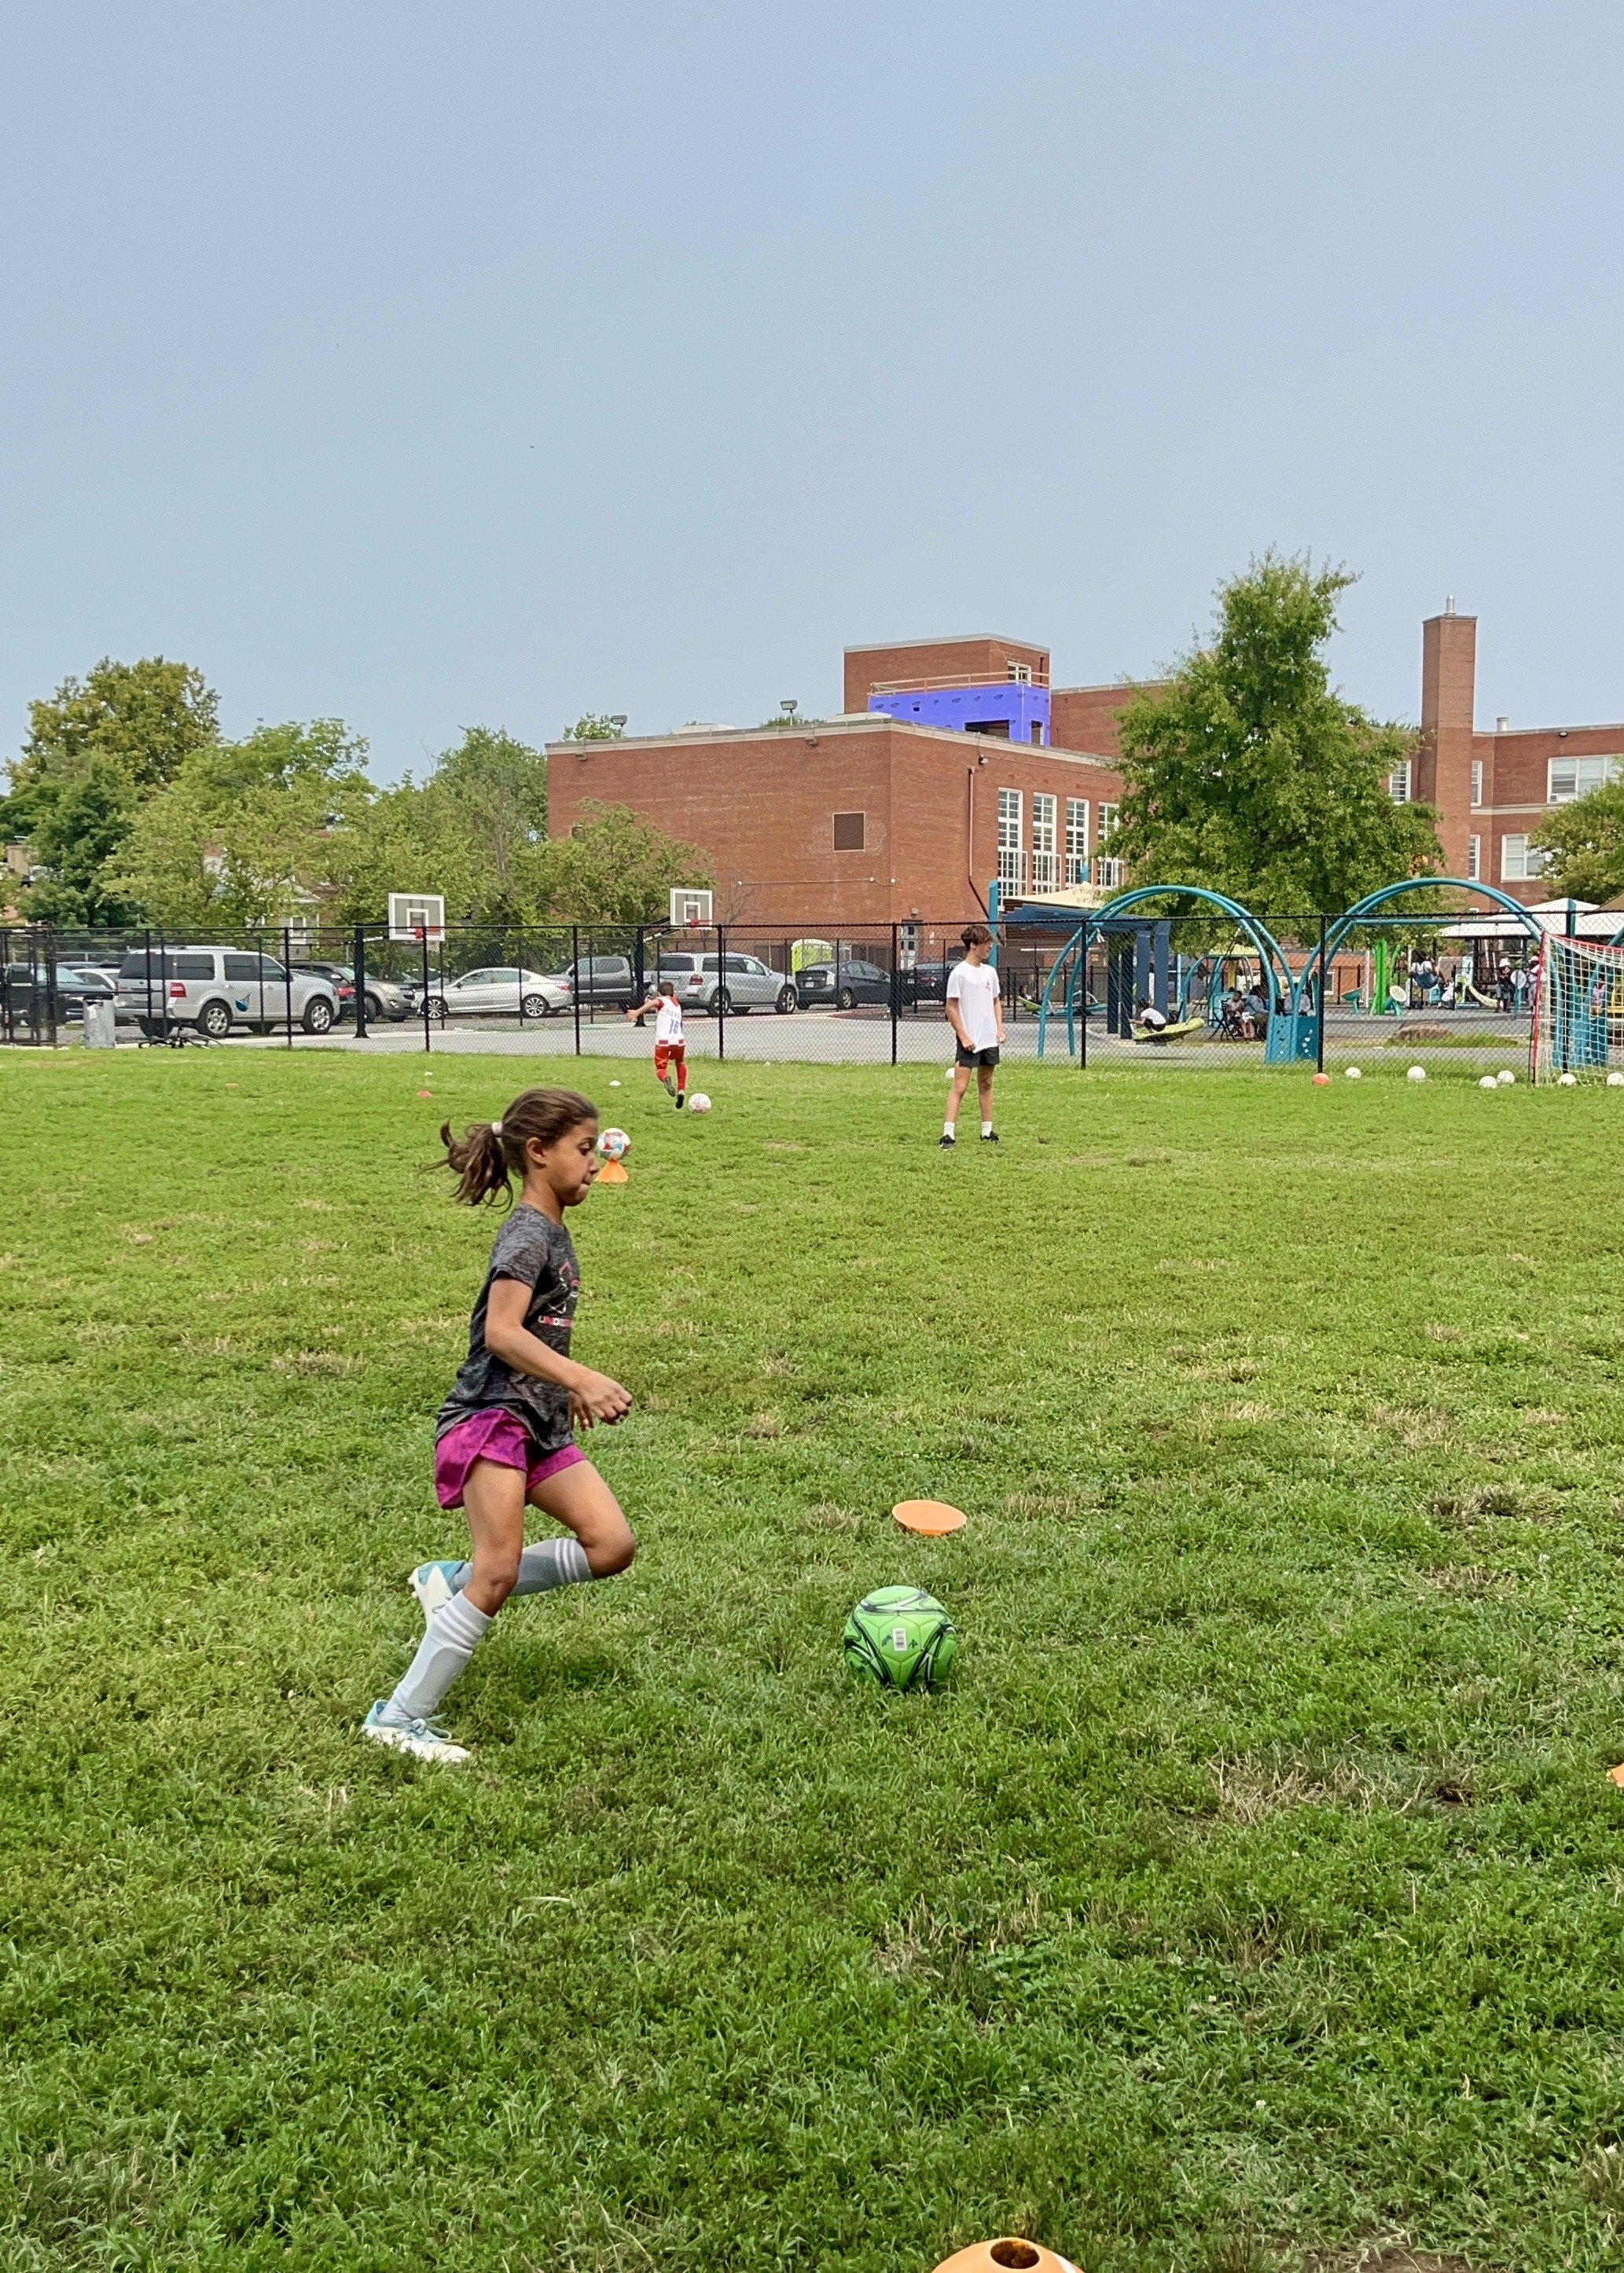 Dc-way-soccer-club-for-kids-in-washington-dc-summer-camp-at-tyler-elementary-school- 9202.JPG